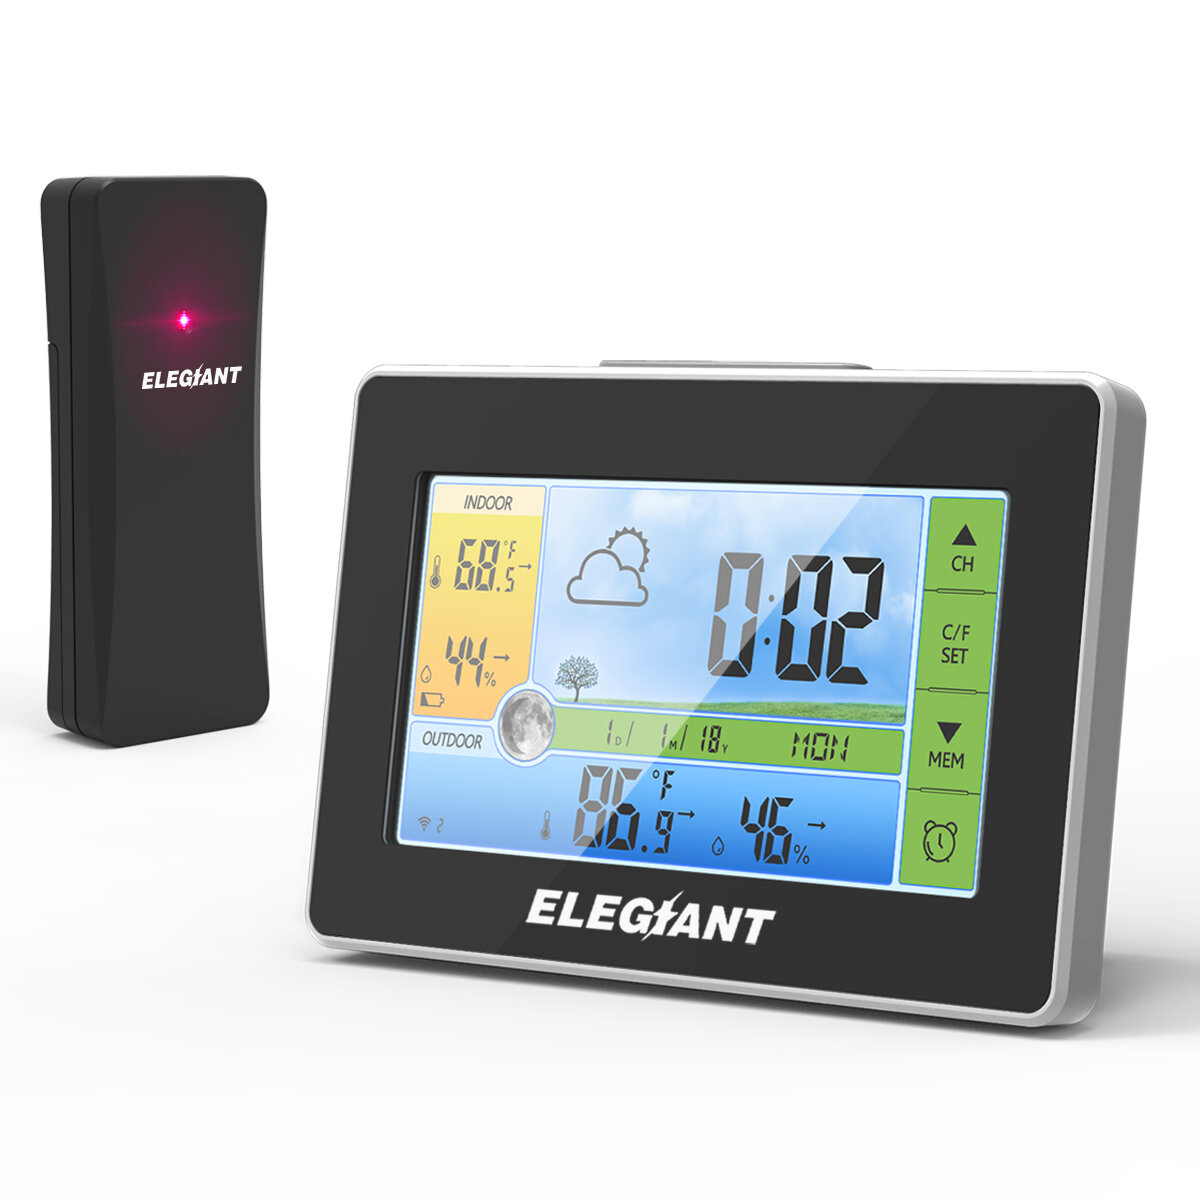 Elegiant eox-9908 touch indoor outdoor weather station alarm clock calendar wireless sensor forecast thermometer hygrometer